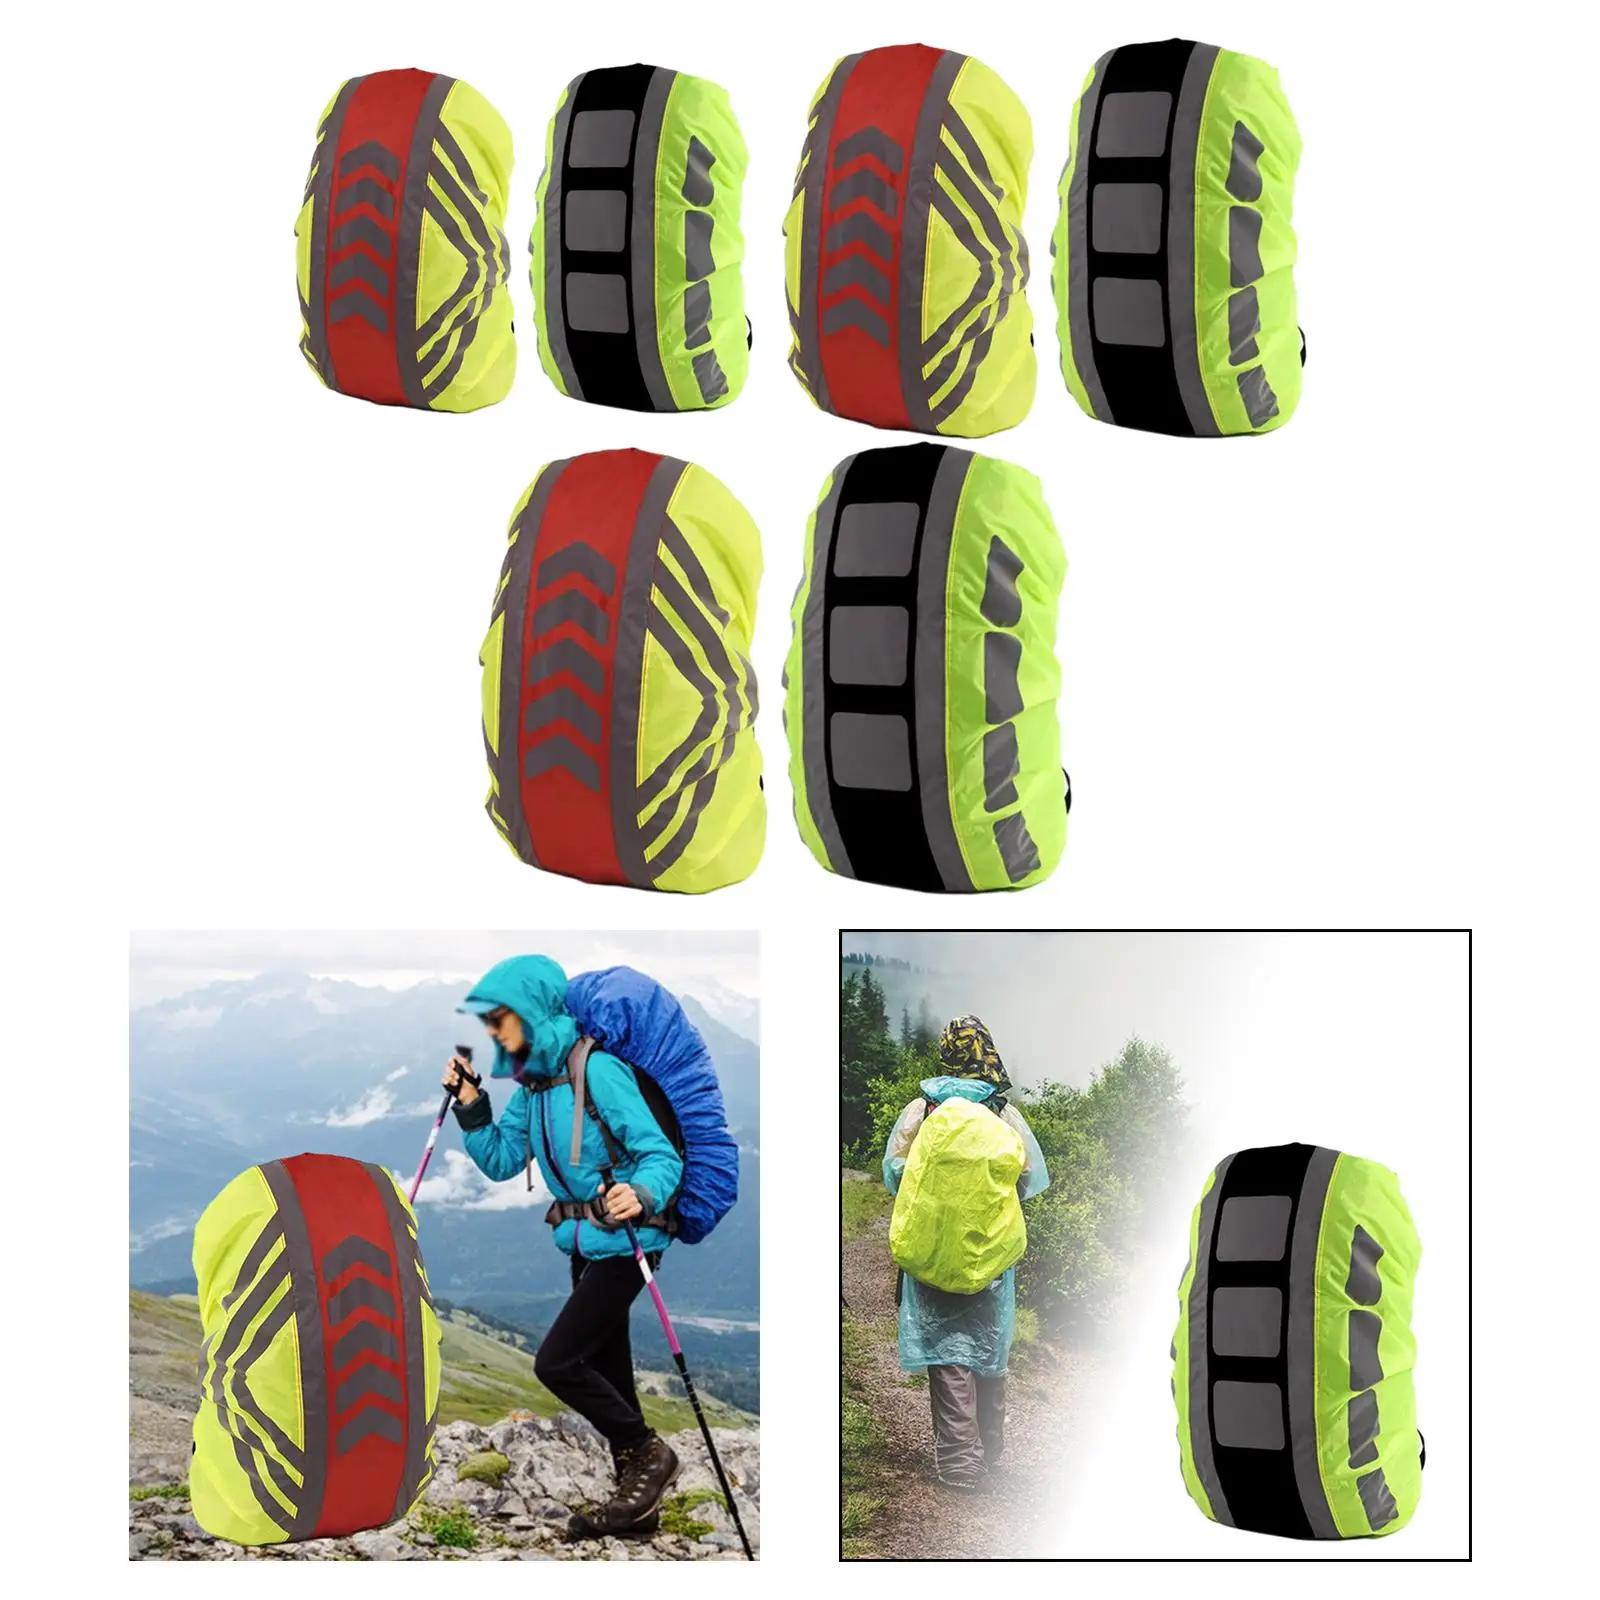 Waterproof Backpack Rain Cover Lightweight Sport Bag Covers Rucksack Covers for Biking, Hiking, Outdoor, Backpacking, Travel